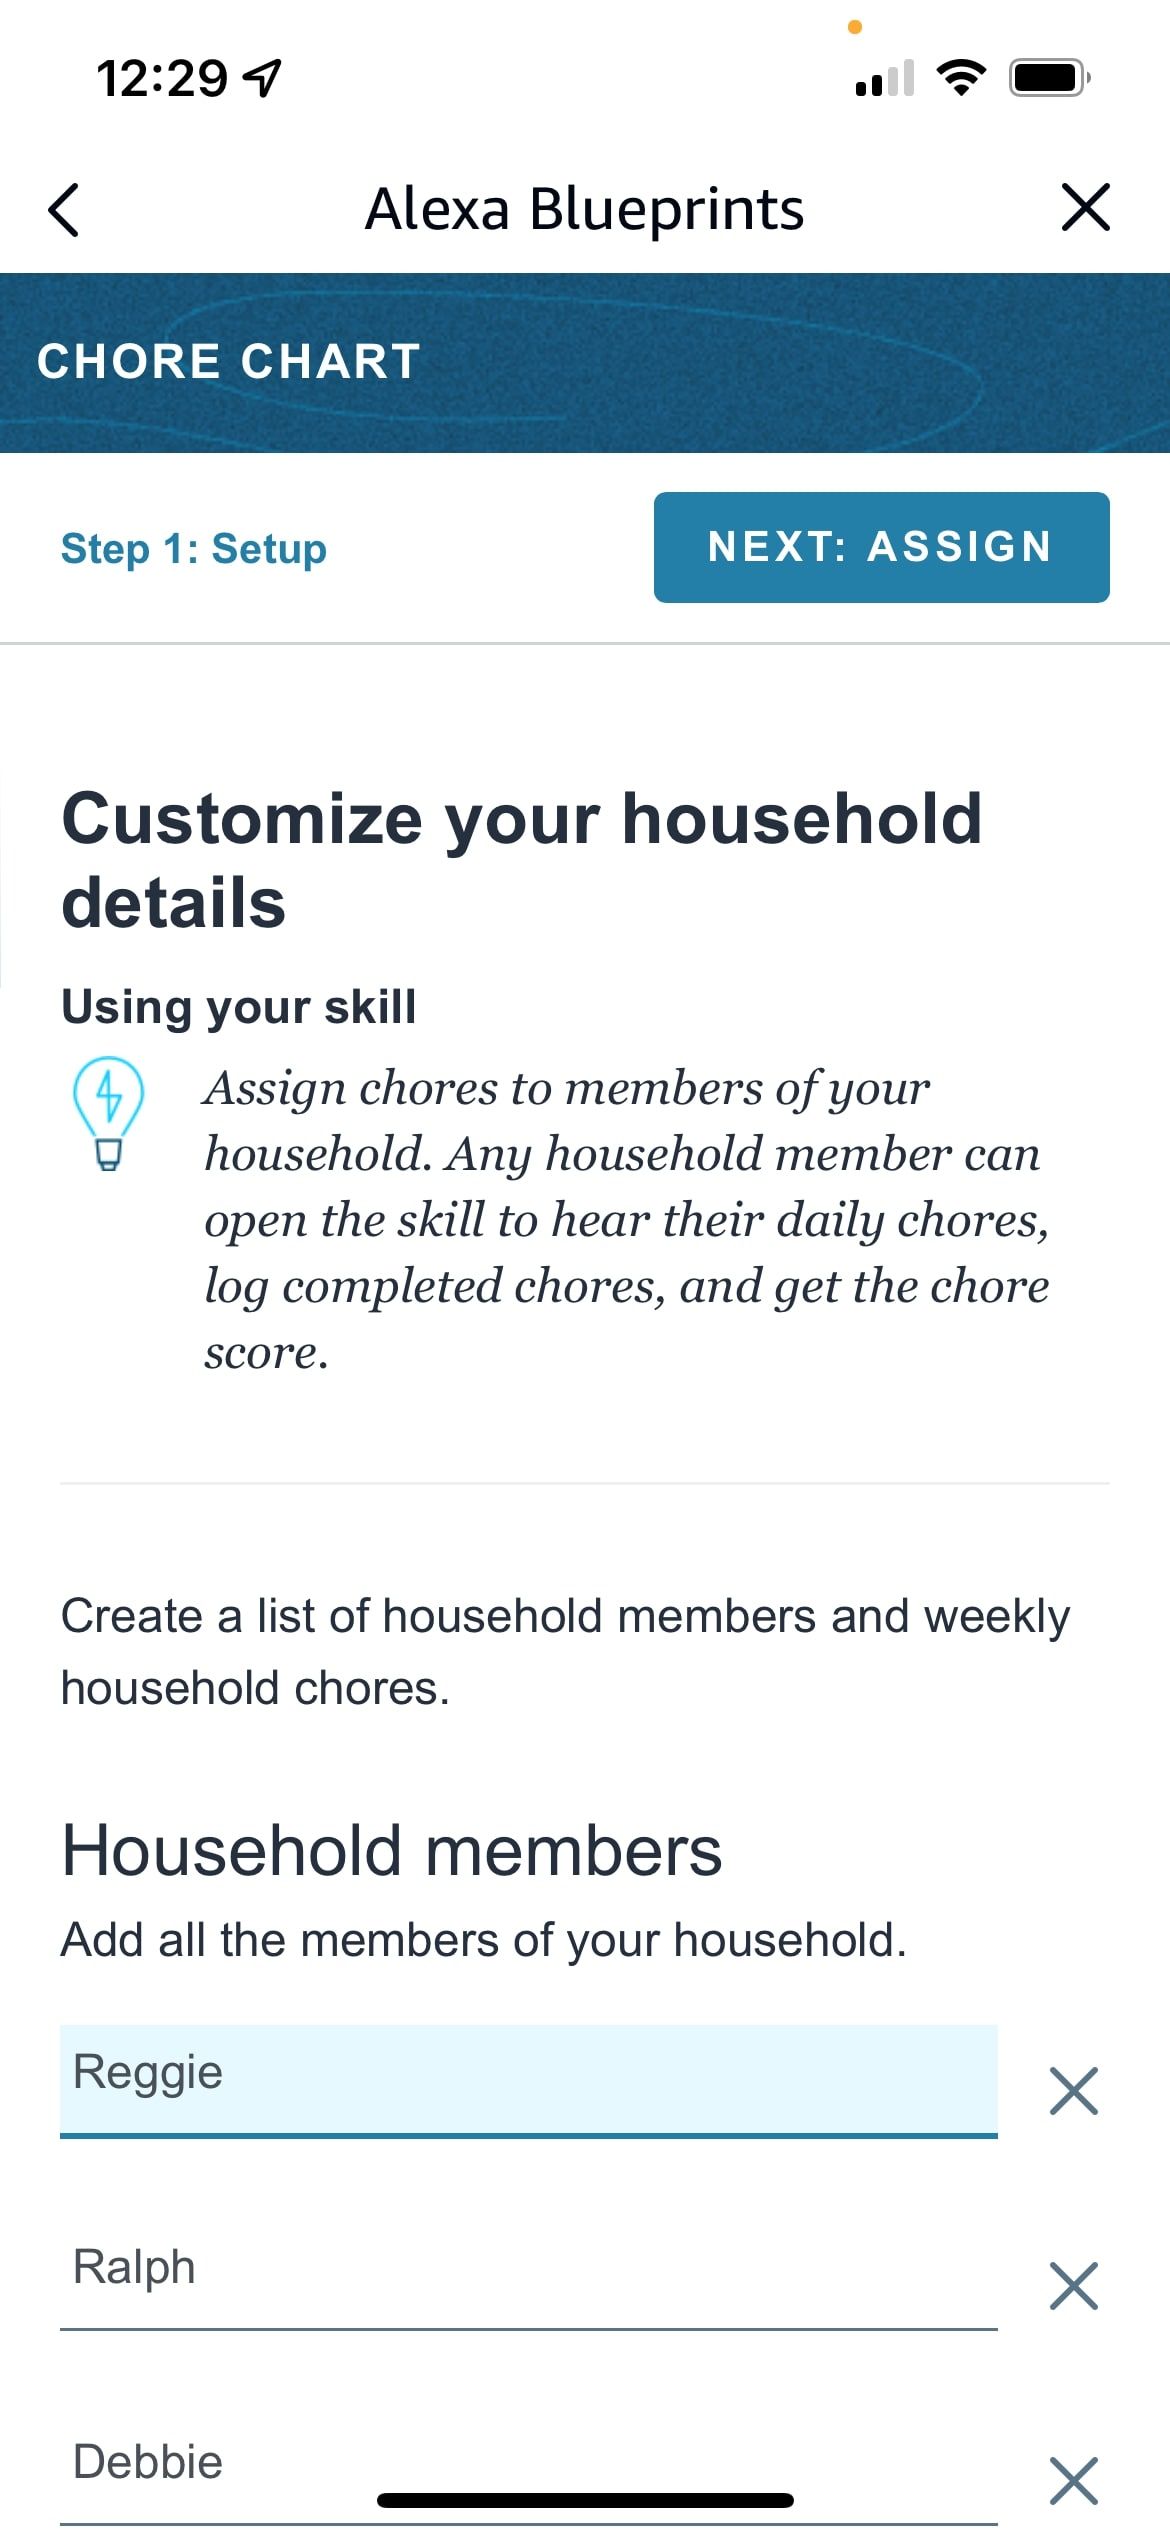 Chore Chart Blueprint creation page